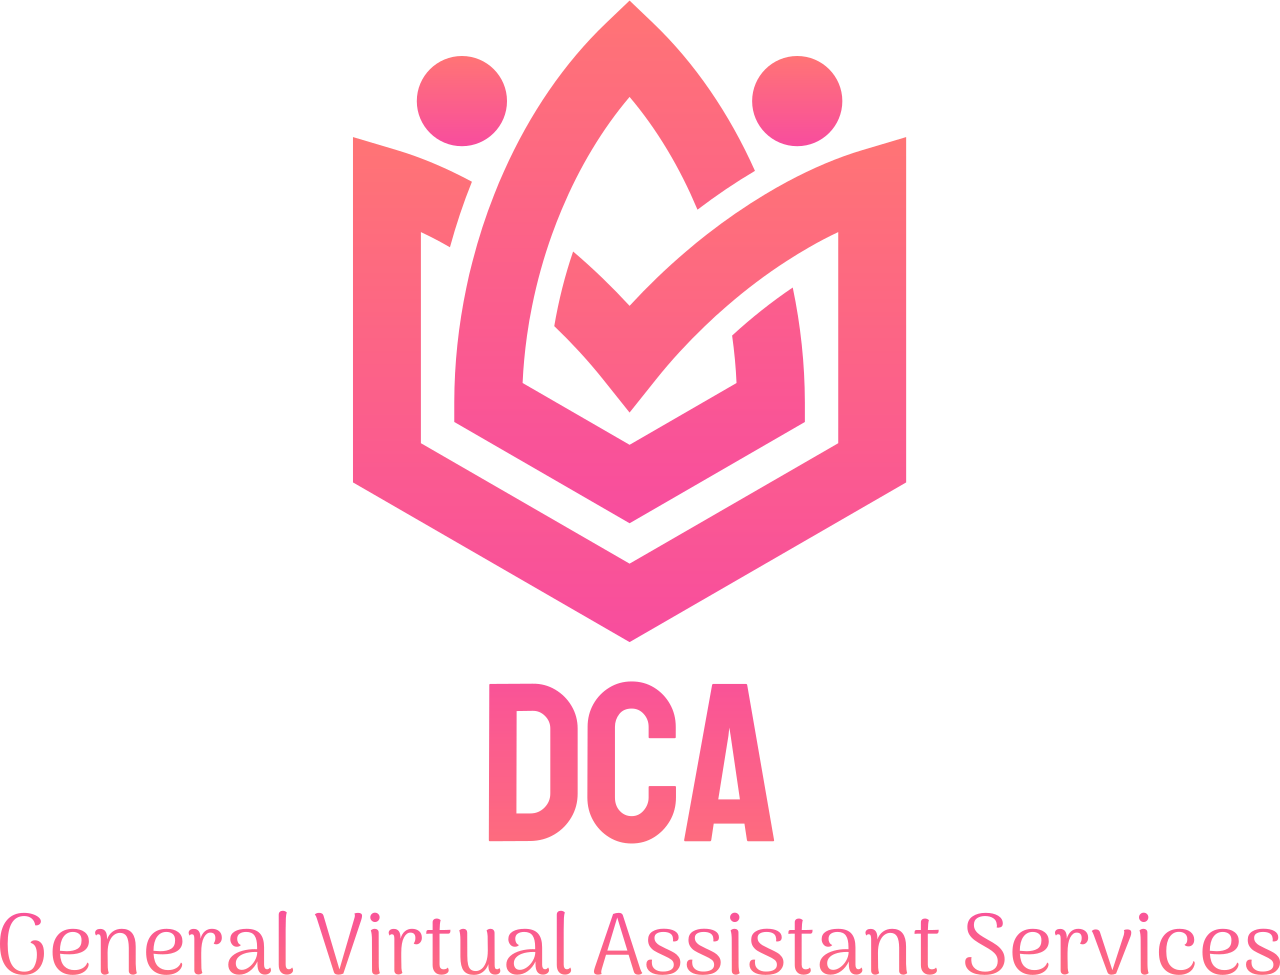 DCA's web page